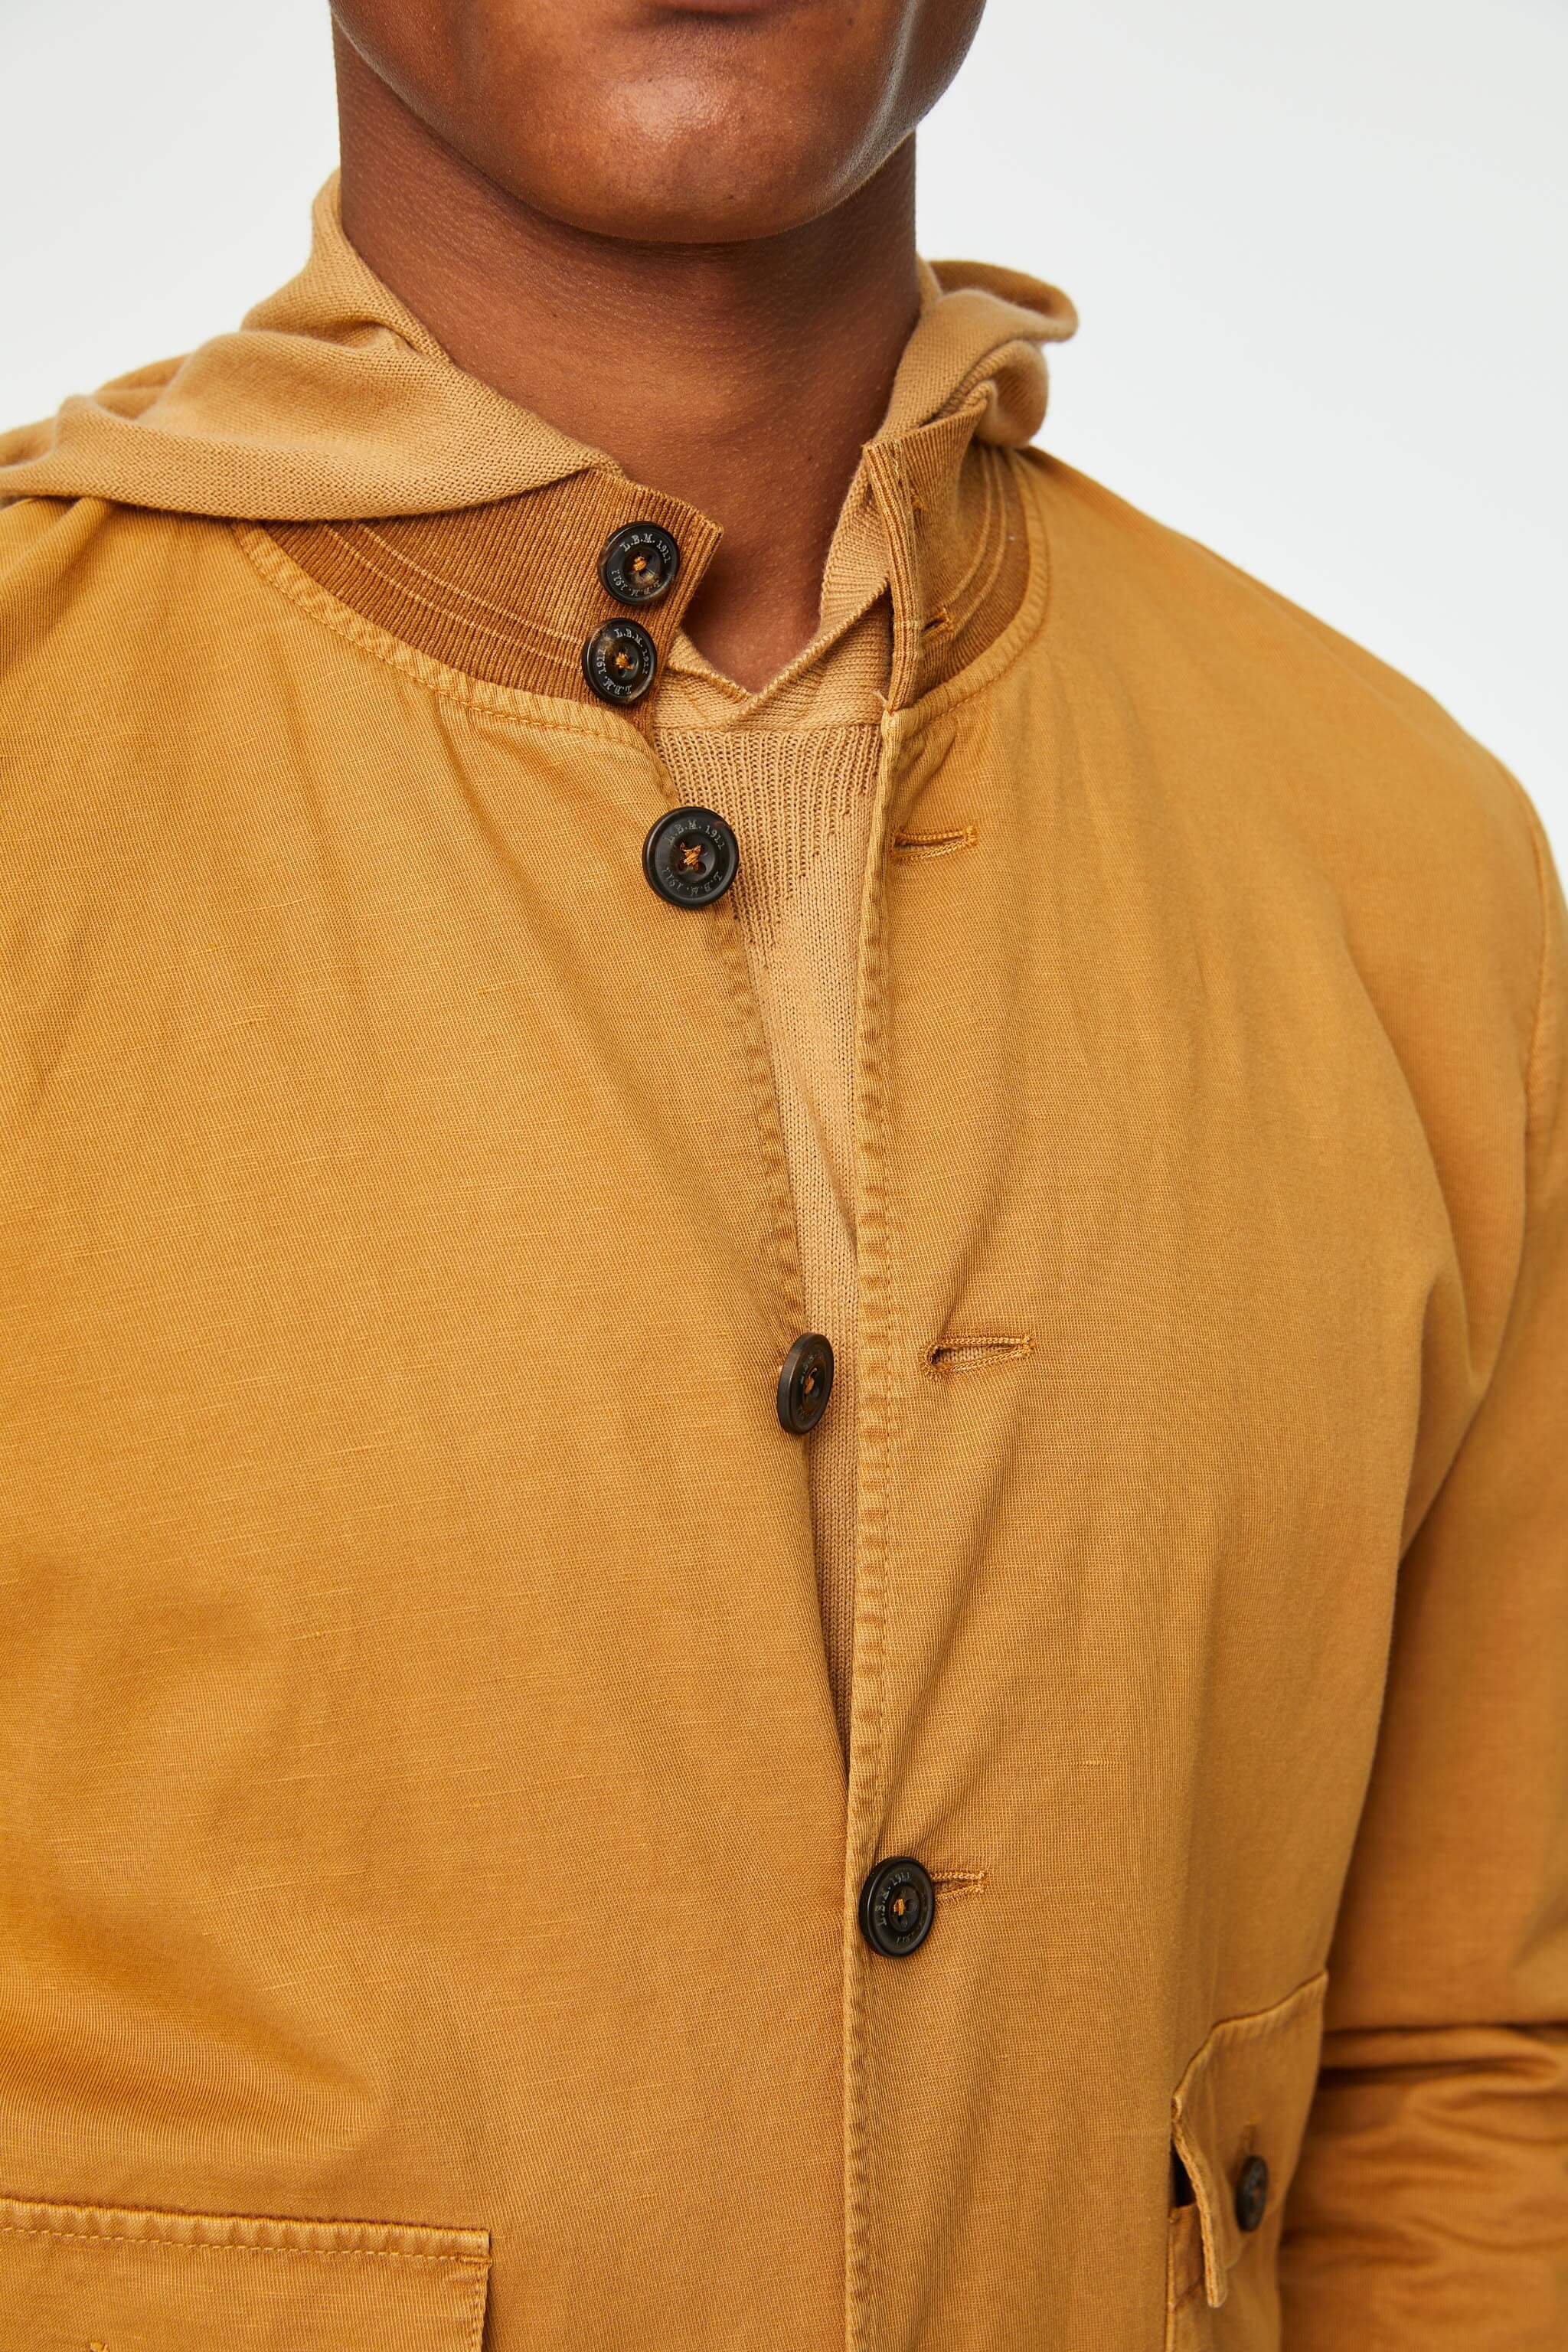 Garment-dyed jacket in caramel